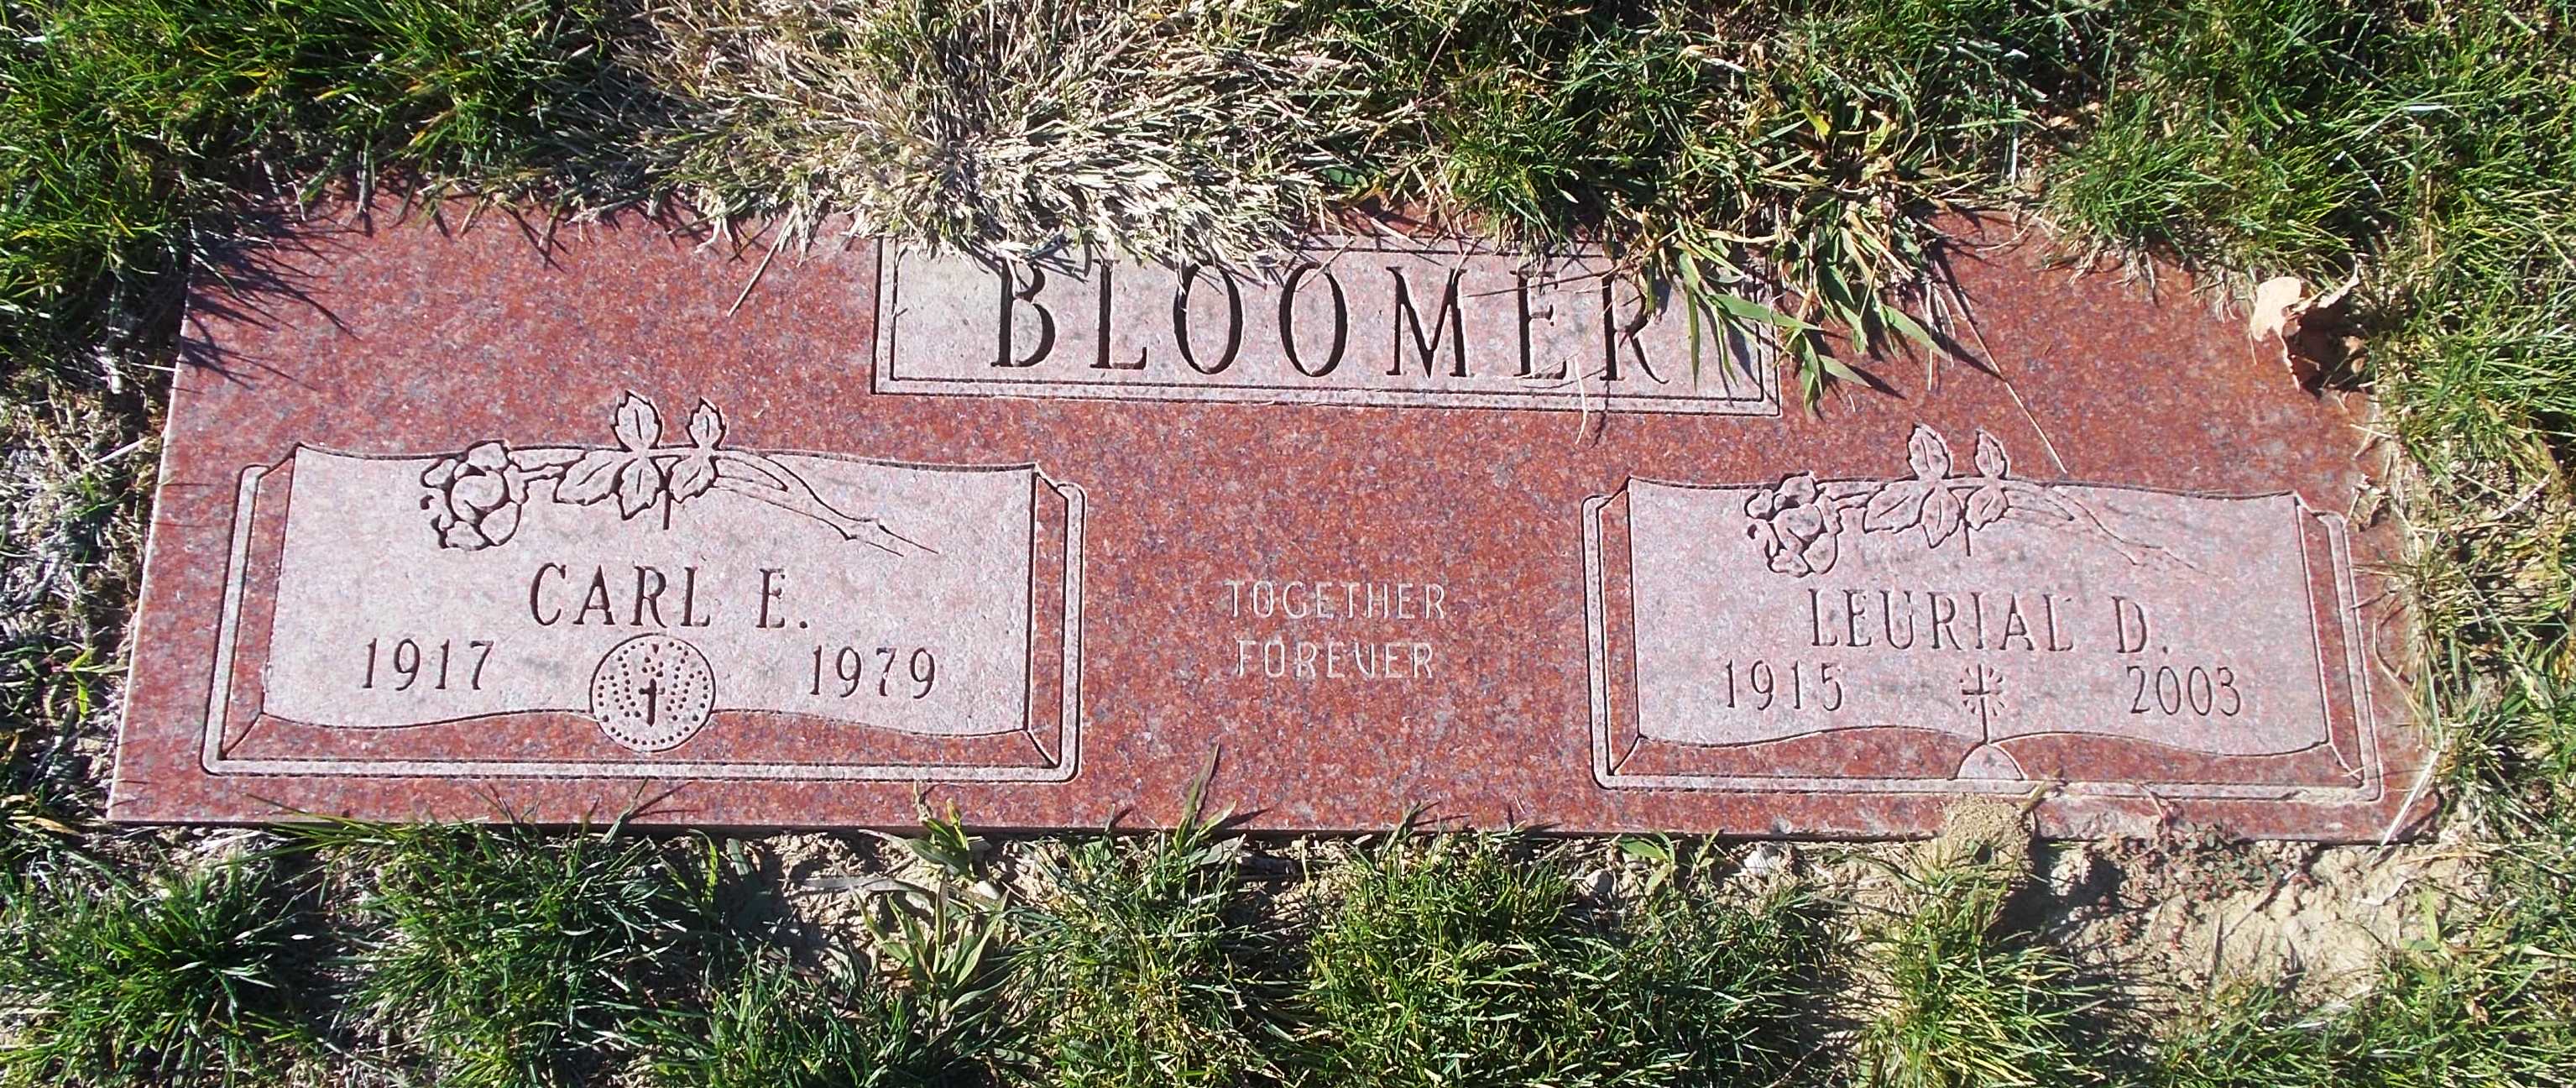 Carl E Bloomer